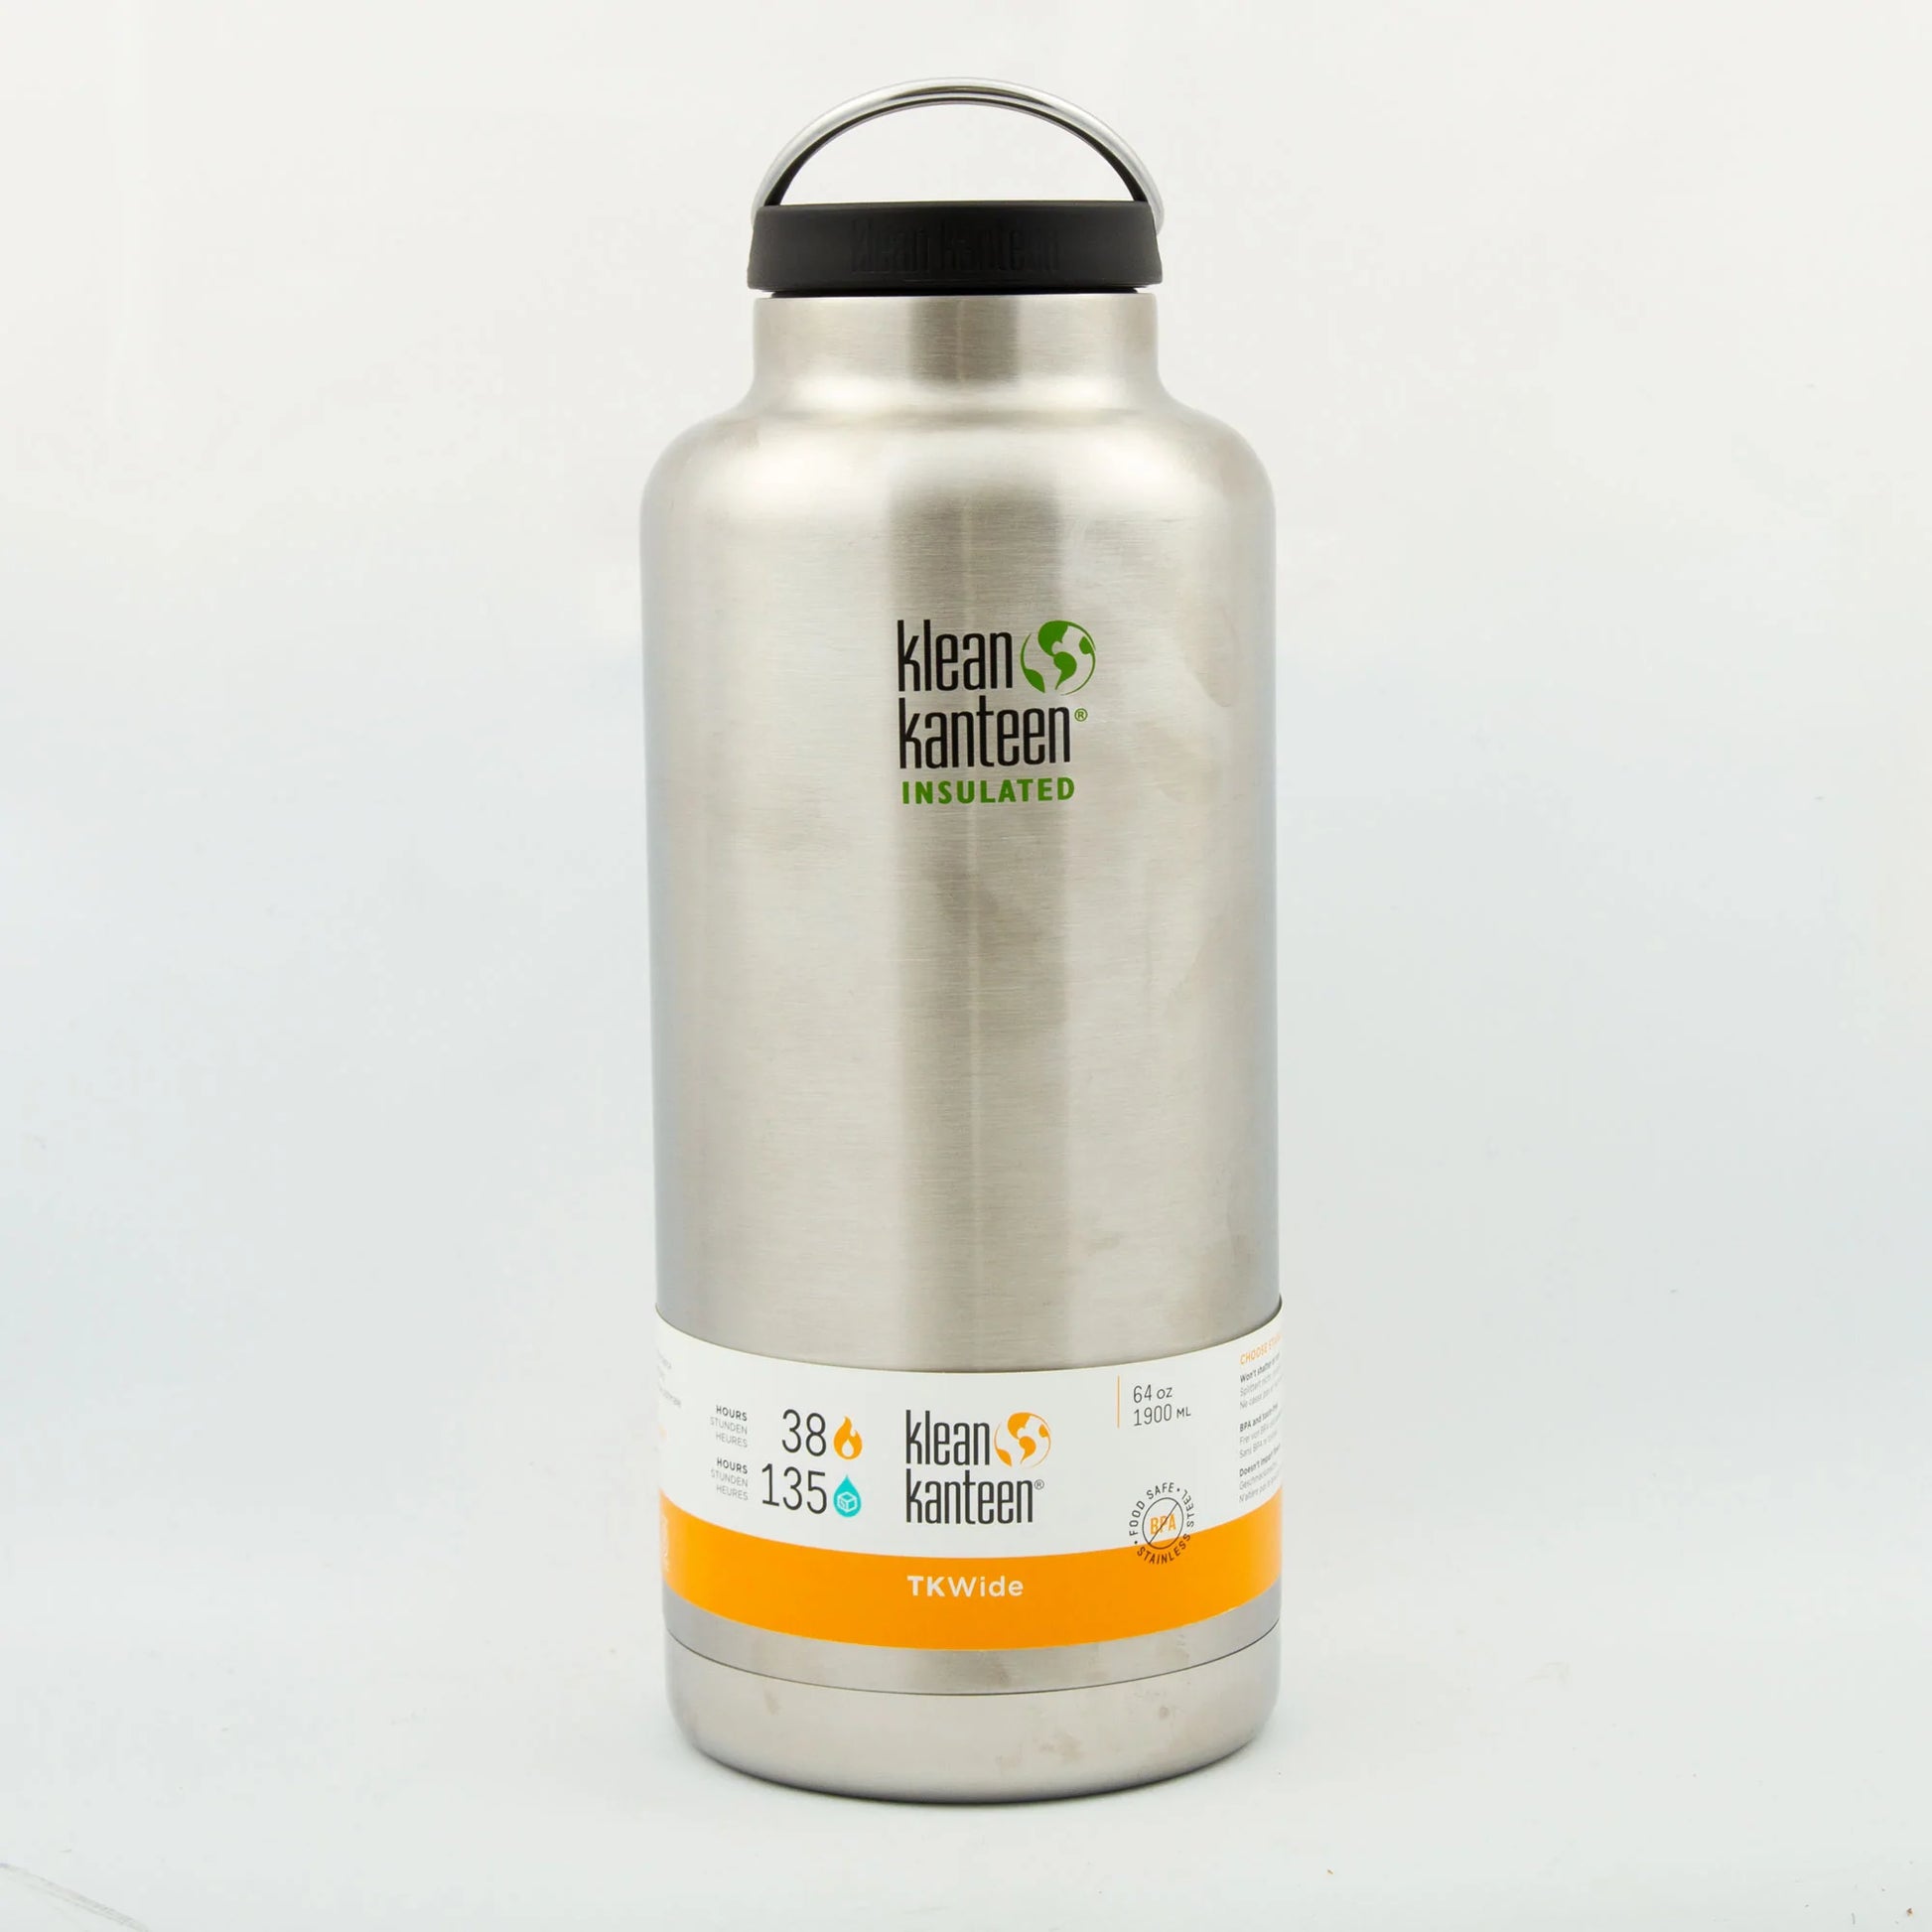 Klean Kanteen Insulated TK Wide 1900ml Loop Cap Brushed Stainless Flask